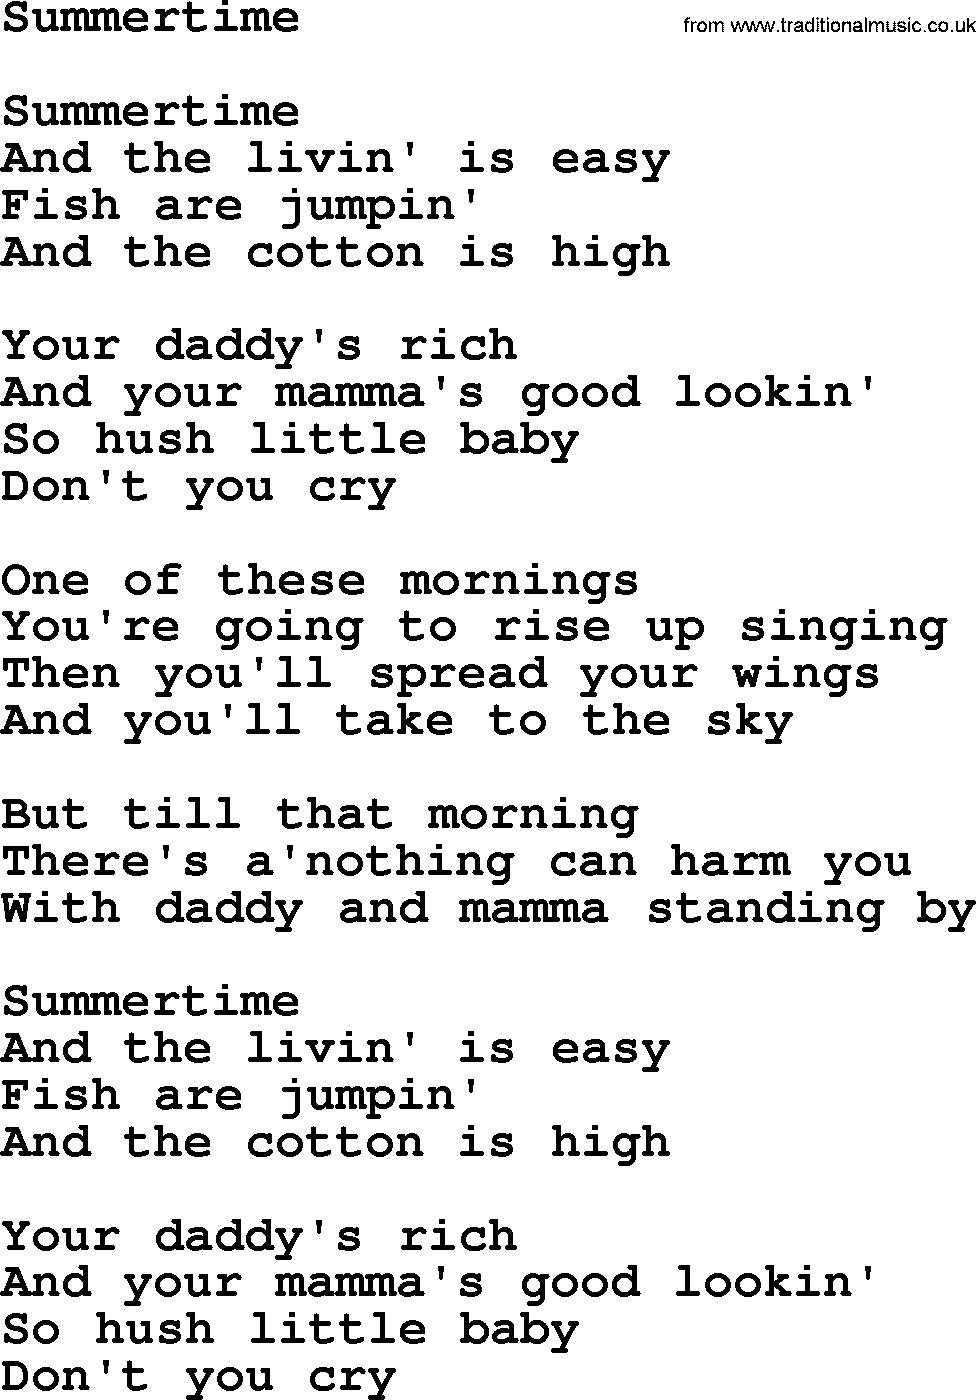 The Byrds song Summertime, lyrics